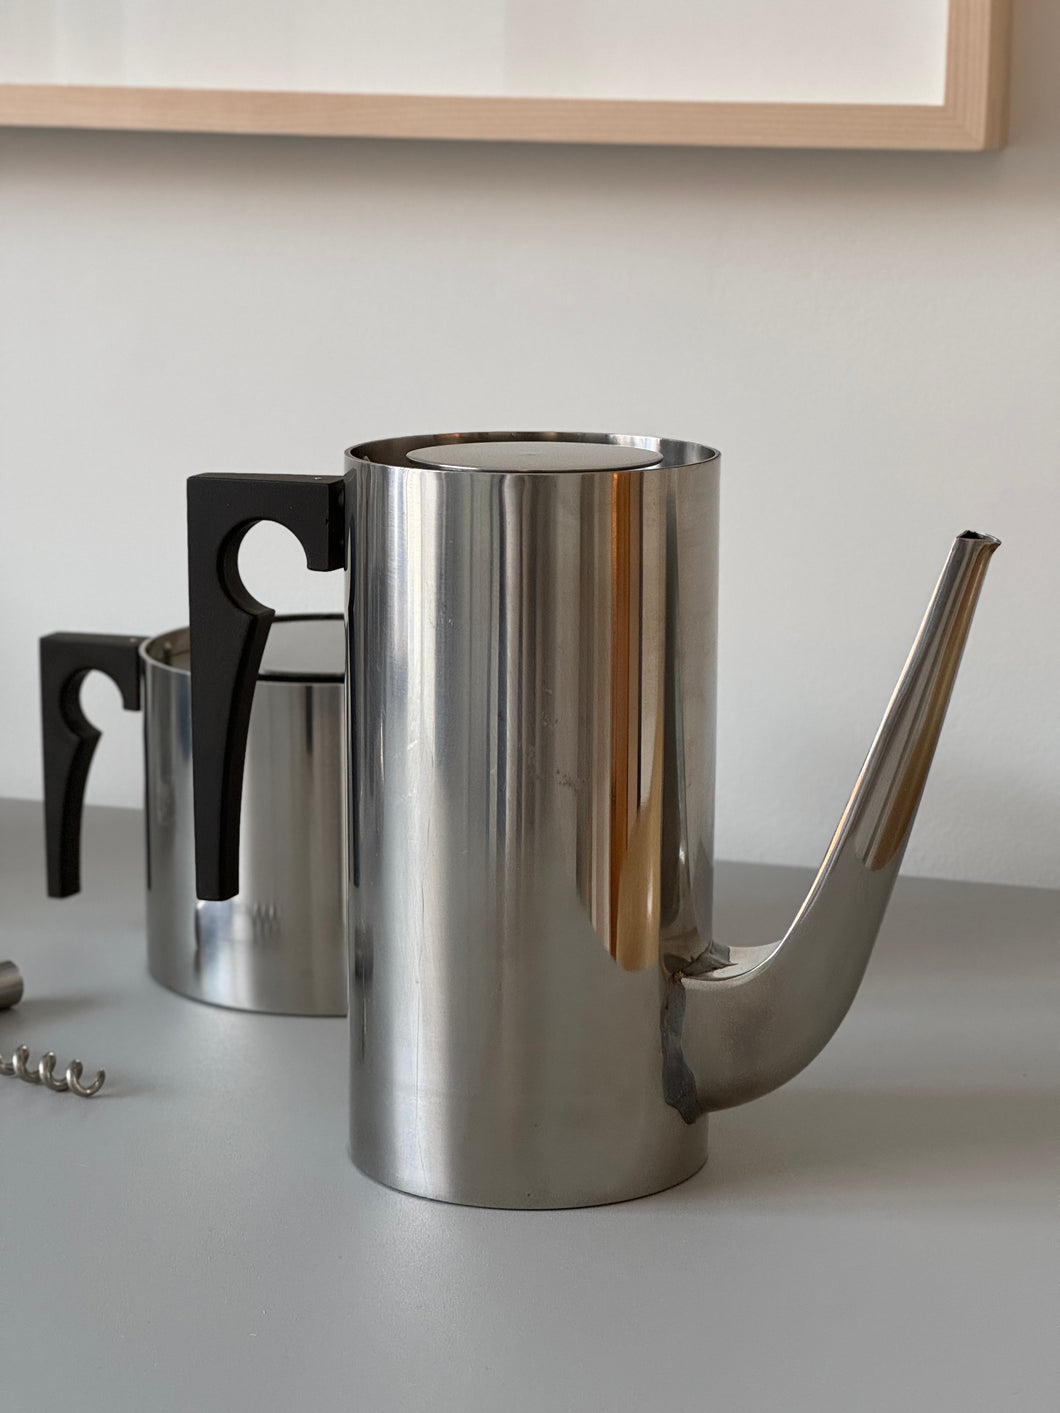 Cylinda coffee pot by Arne Jacobsen for Stelton